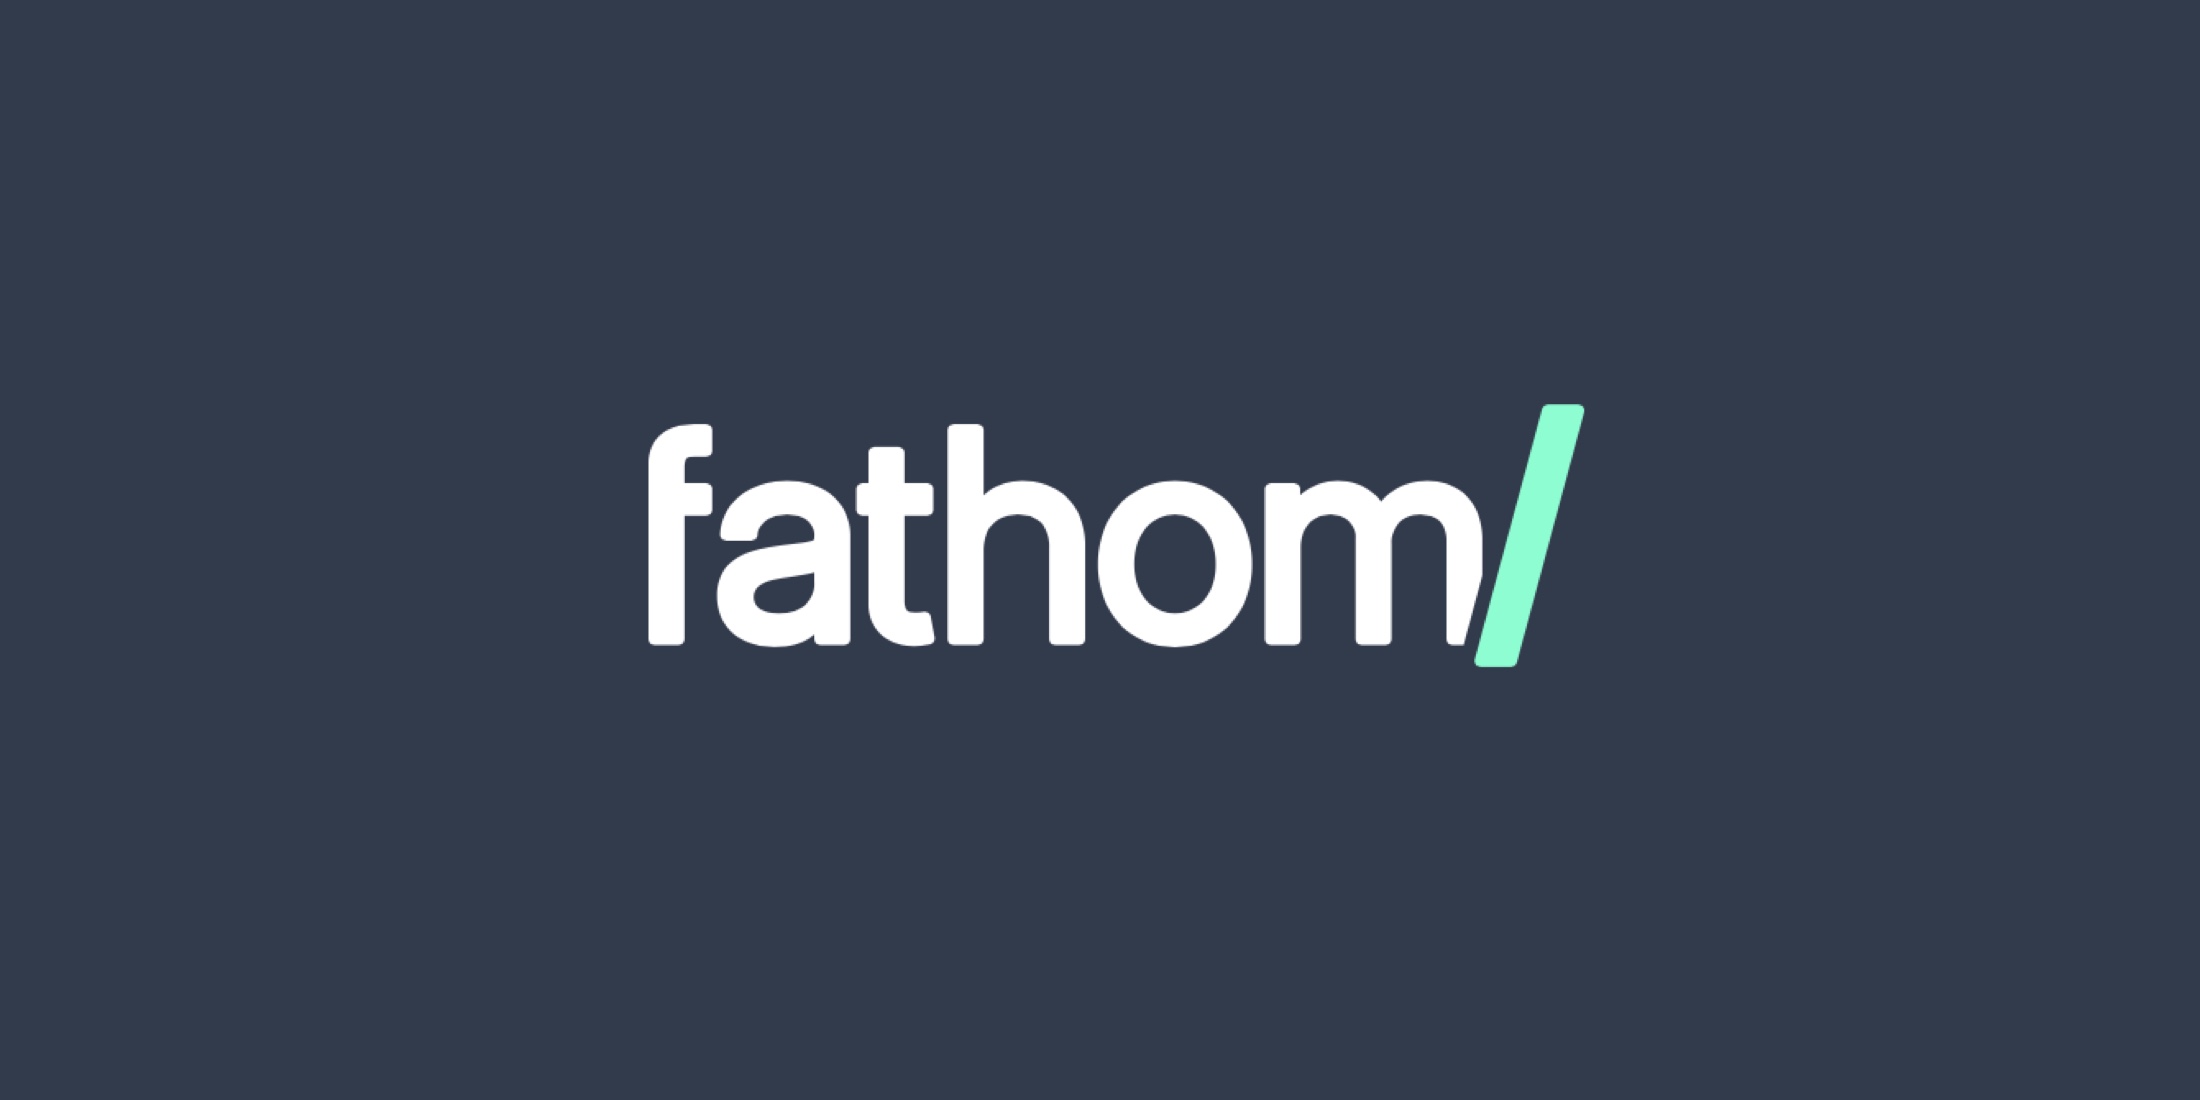 The unofficial Fathom Analytics API image